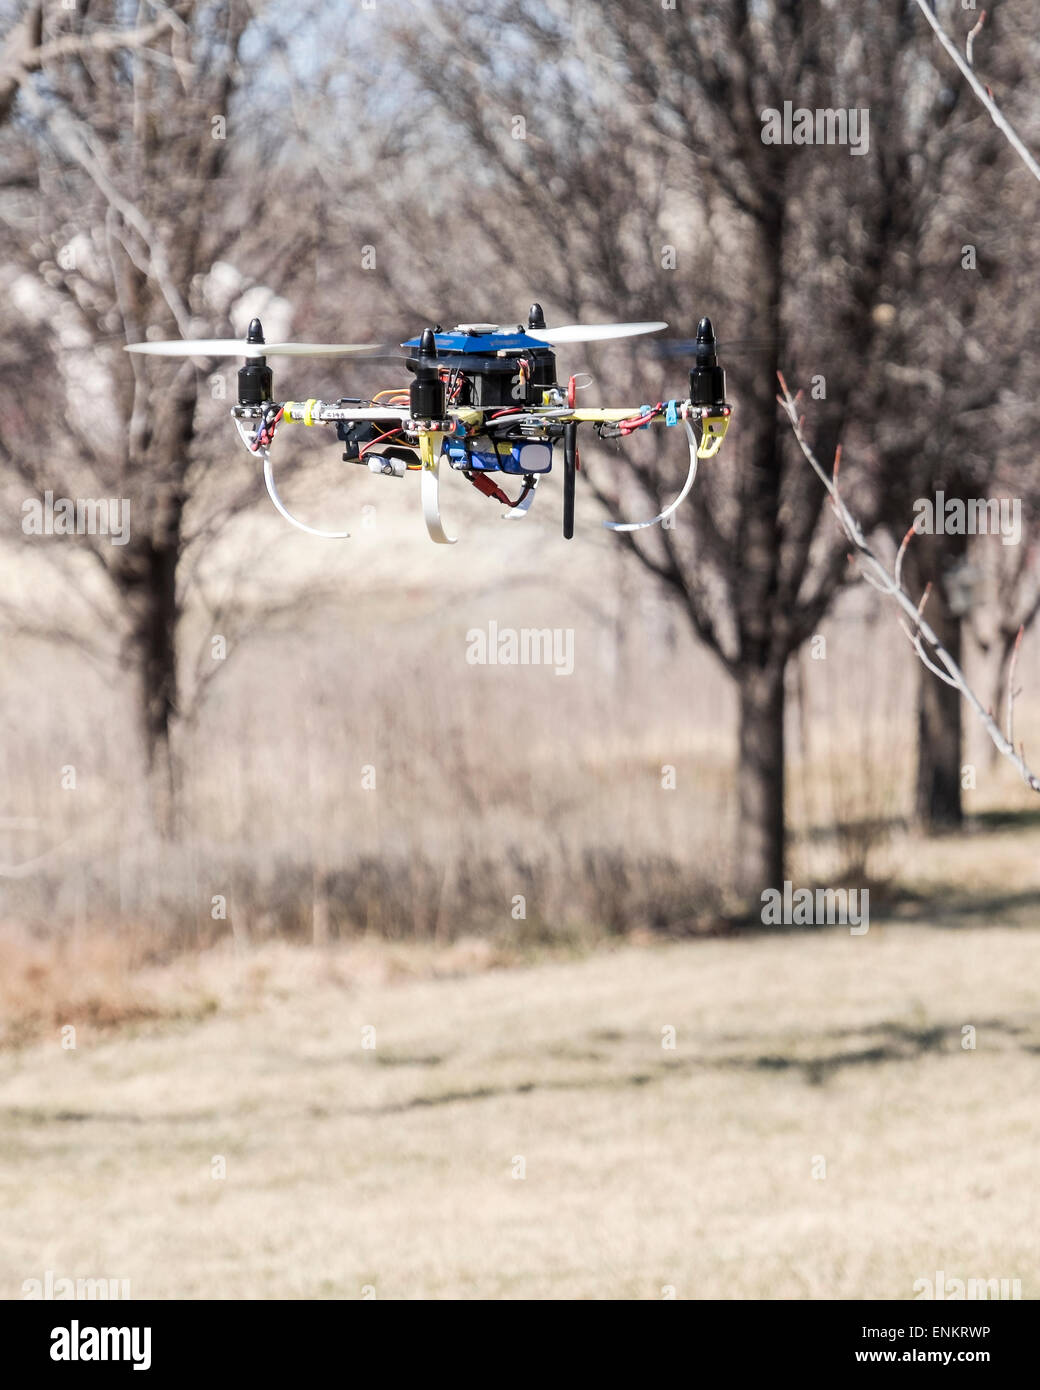 Una casa construida Bricolaje quad copter drone, volando. Foto de stock